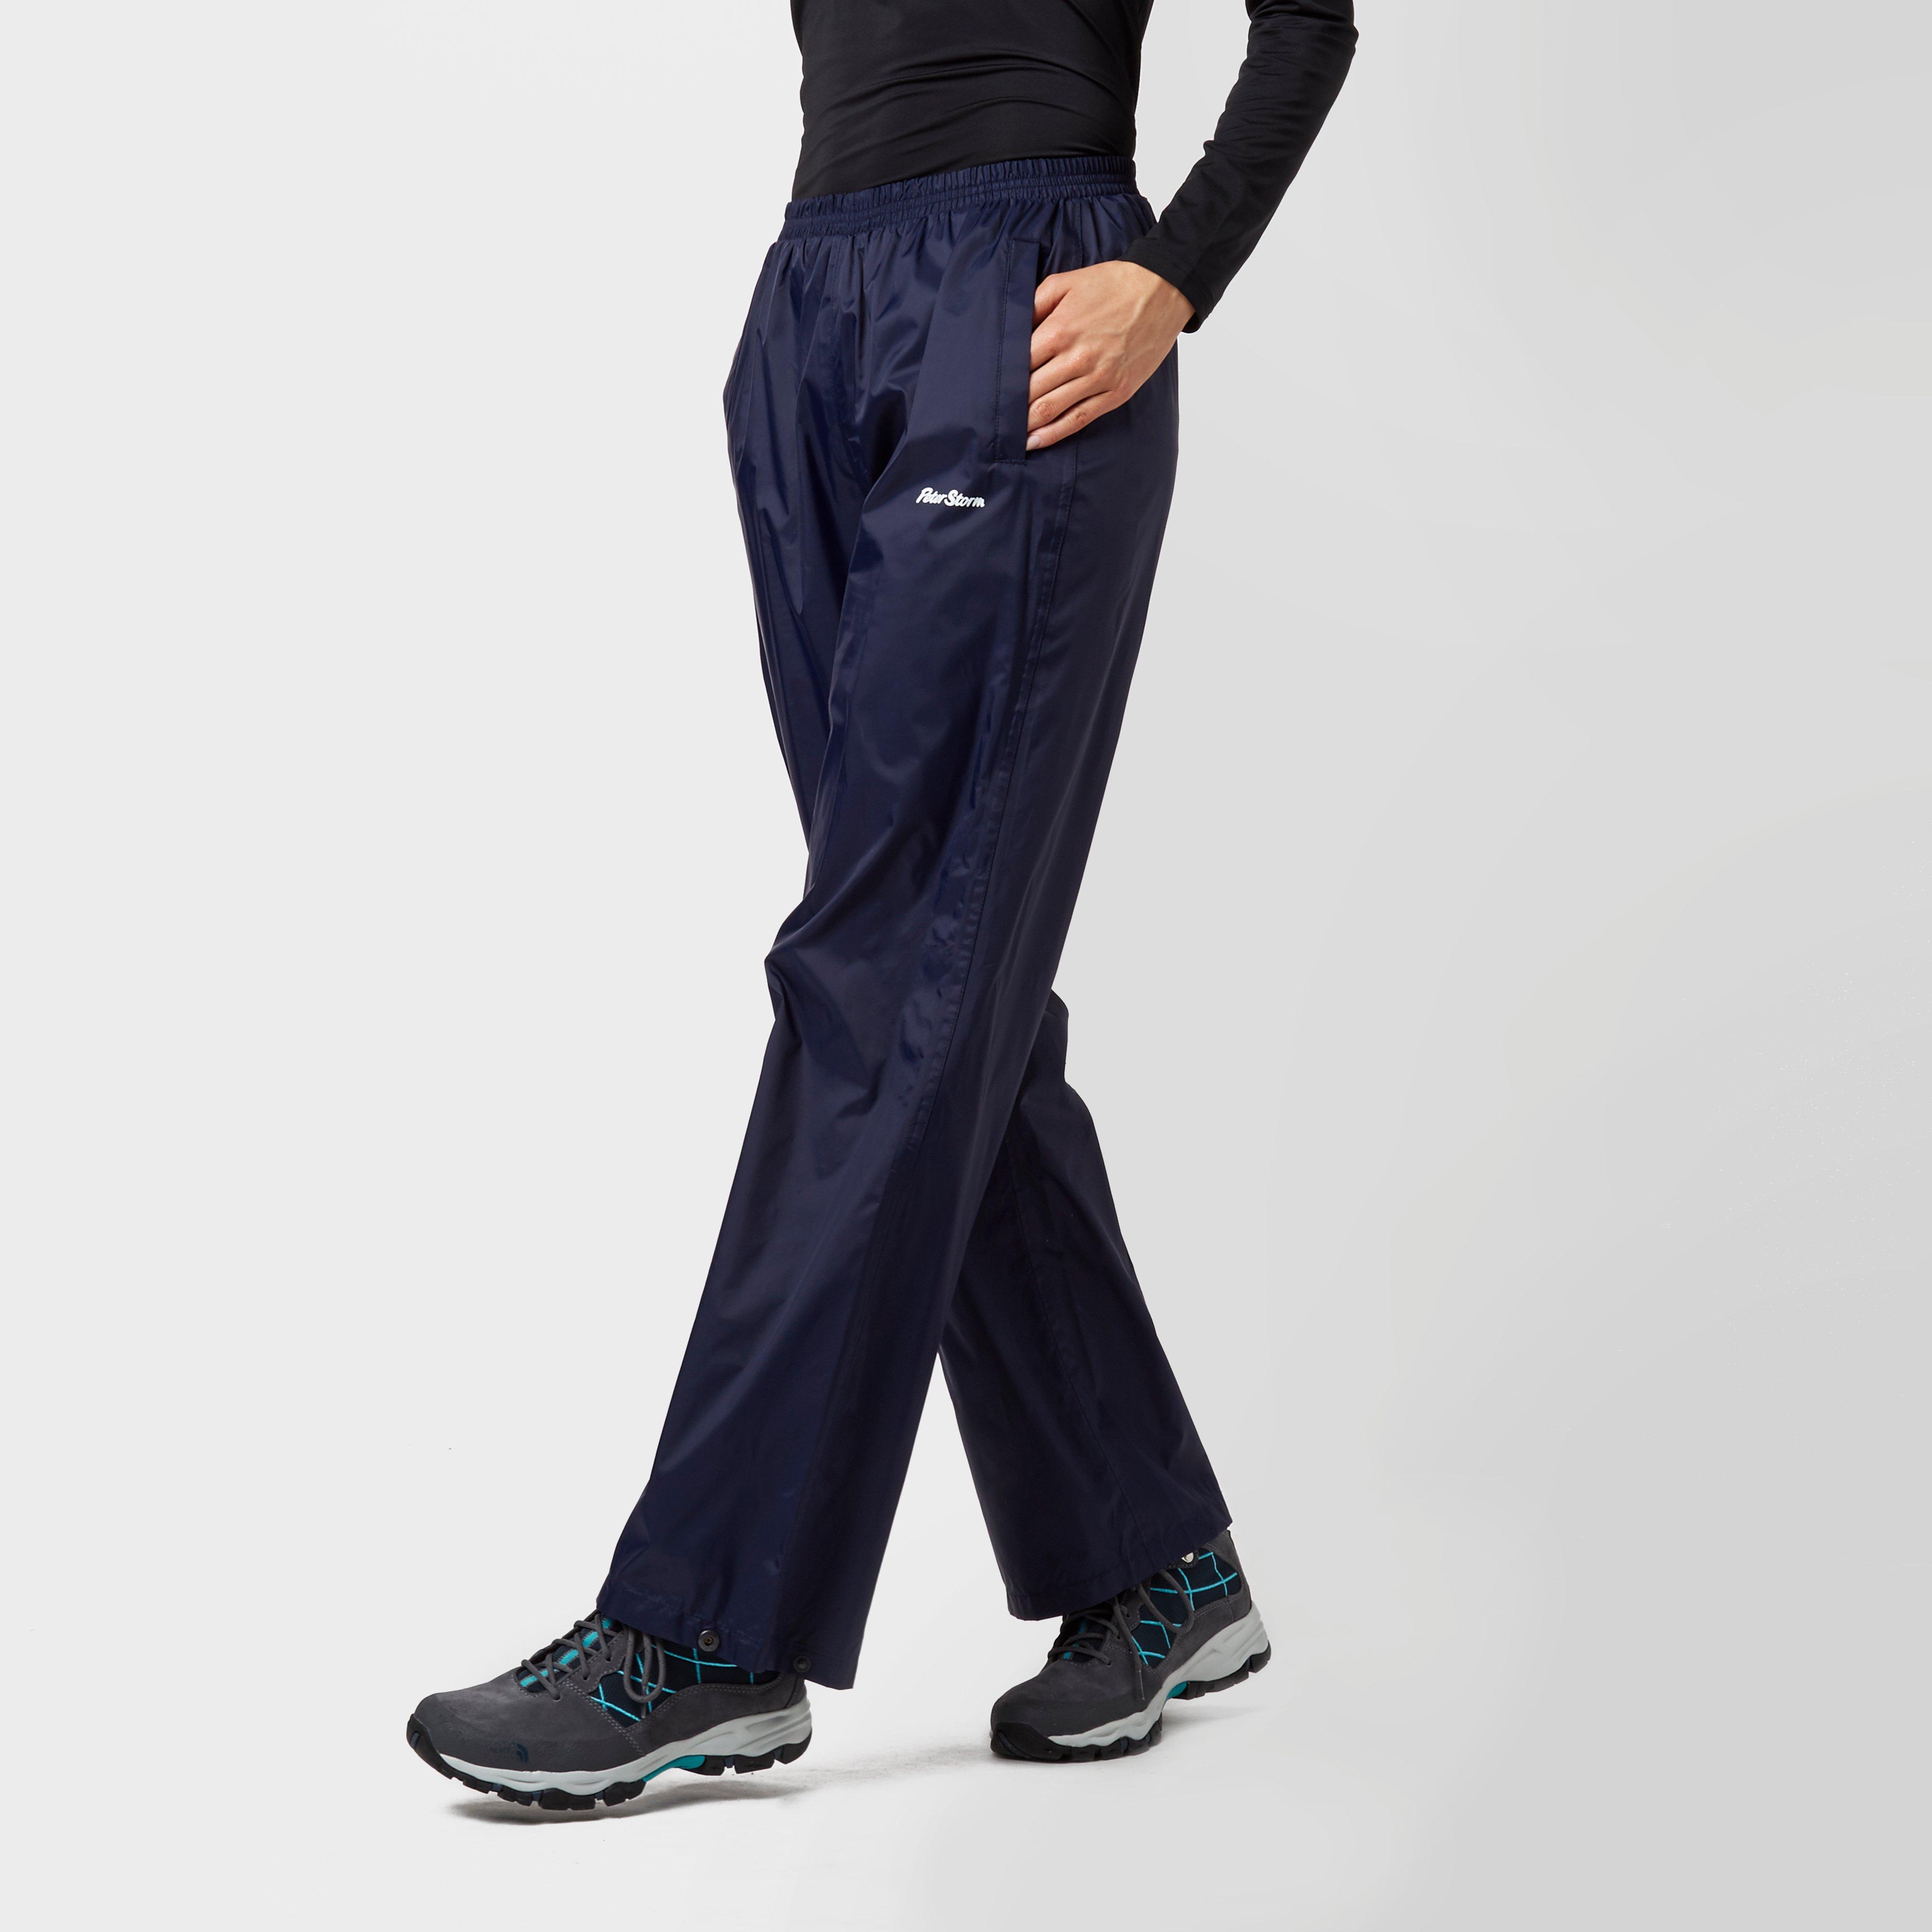 Peter Storm Womens Packable Pants - Navy/navy  Navy/navy